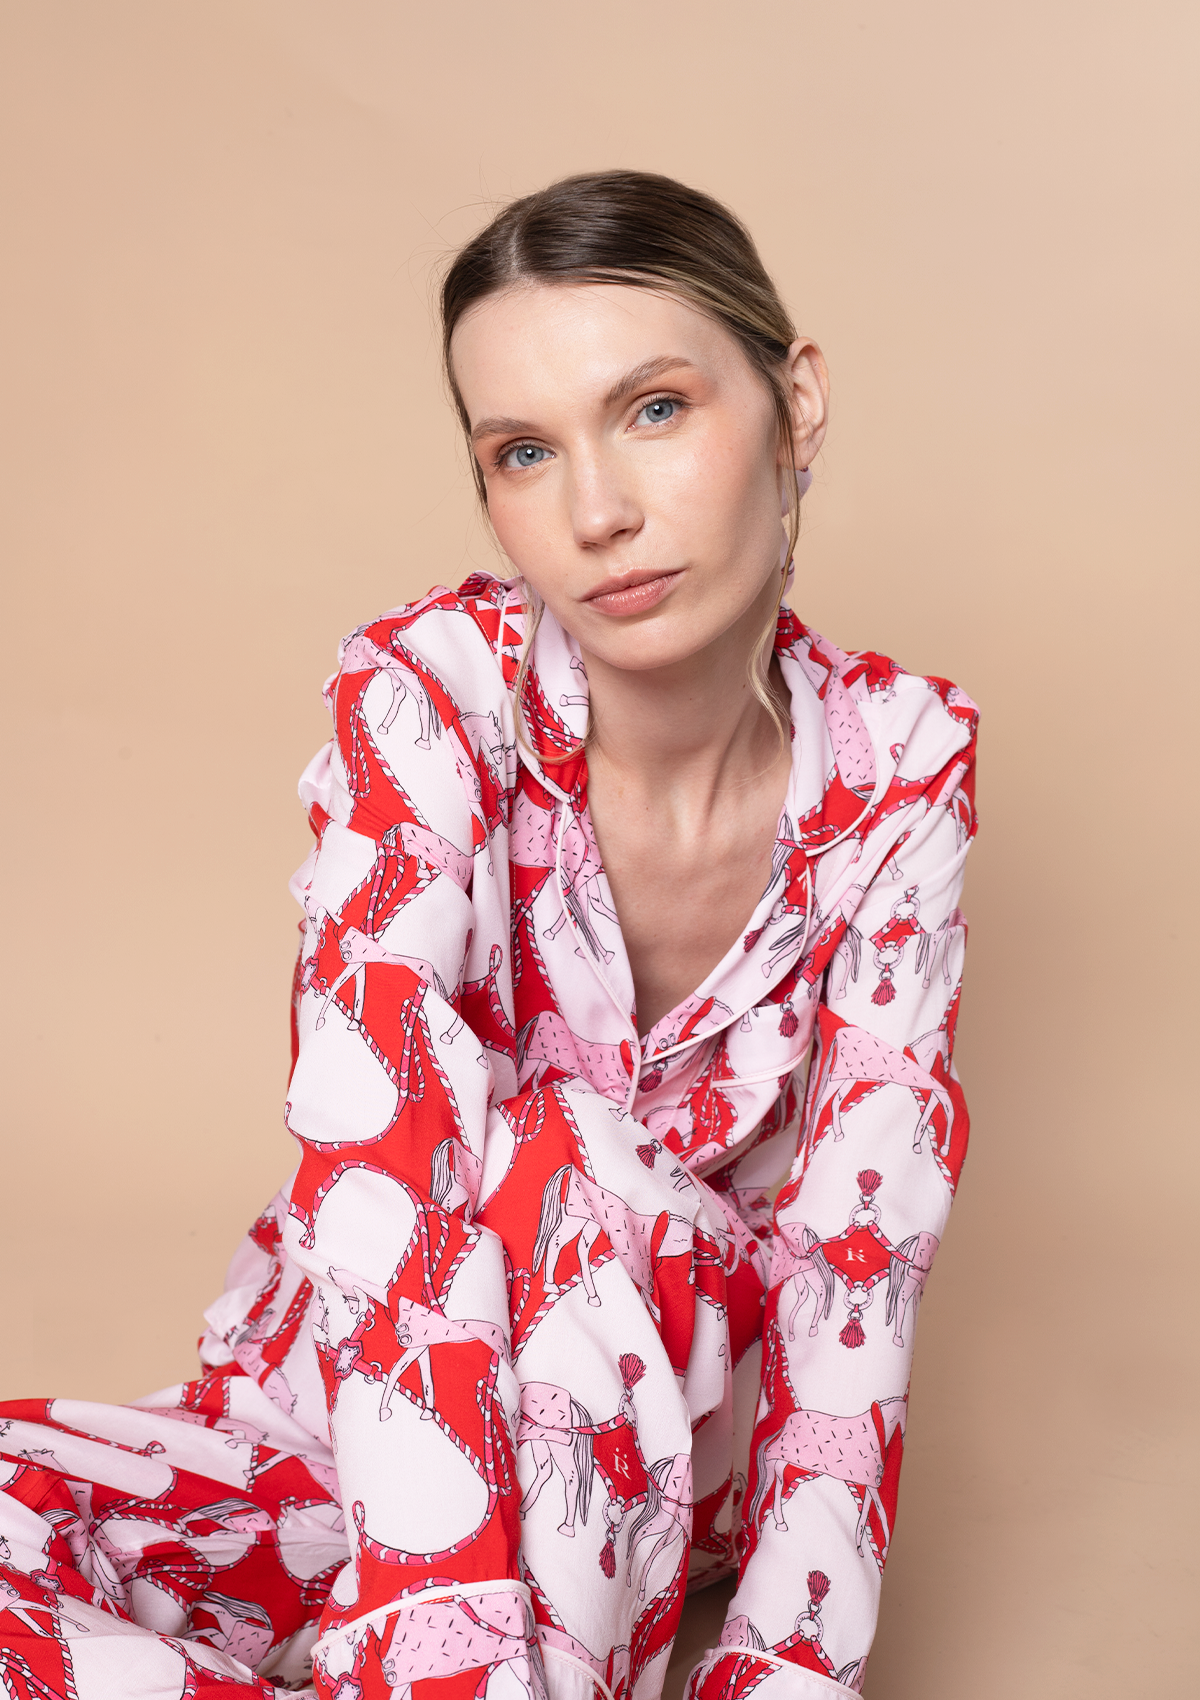 Horsebond PJ’s Set Long Sleeve | Red & White | Equestrian Sleepwear Collection - Rönner